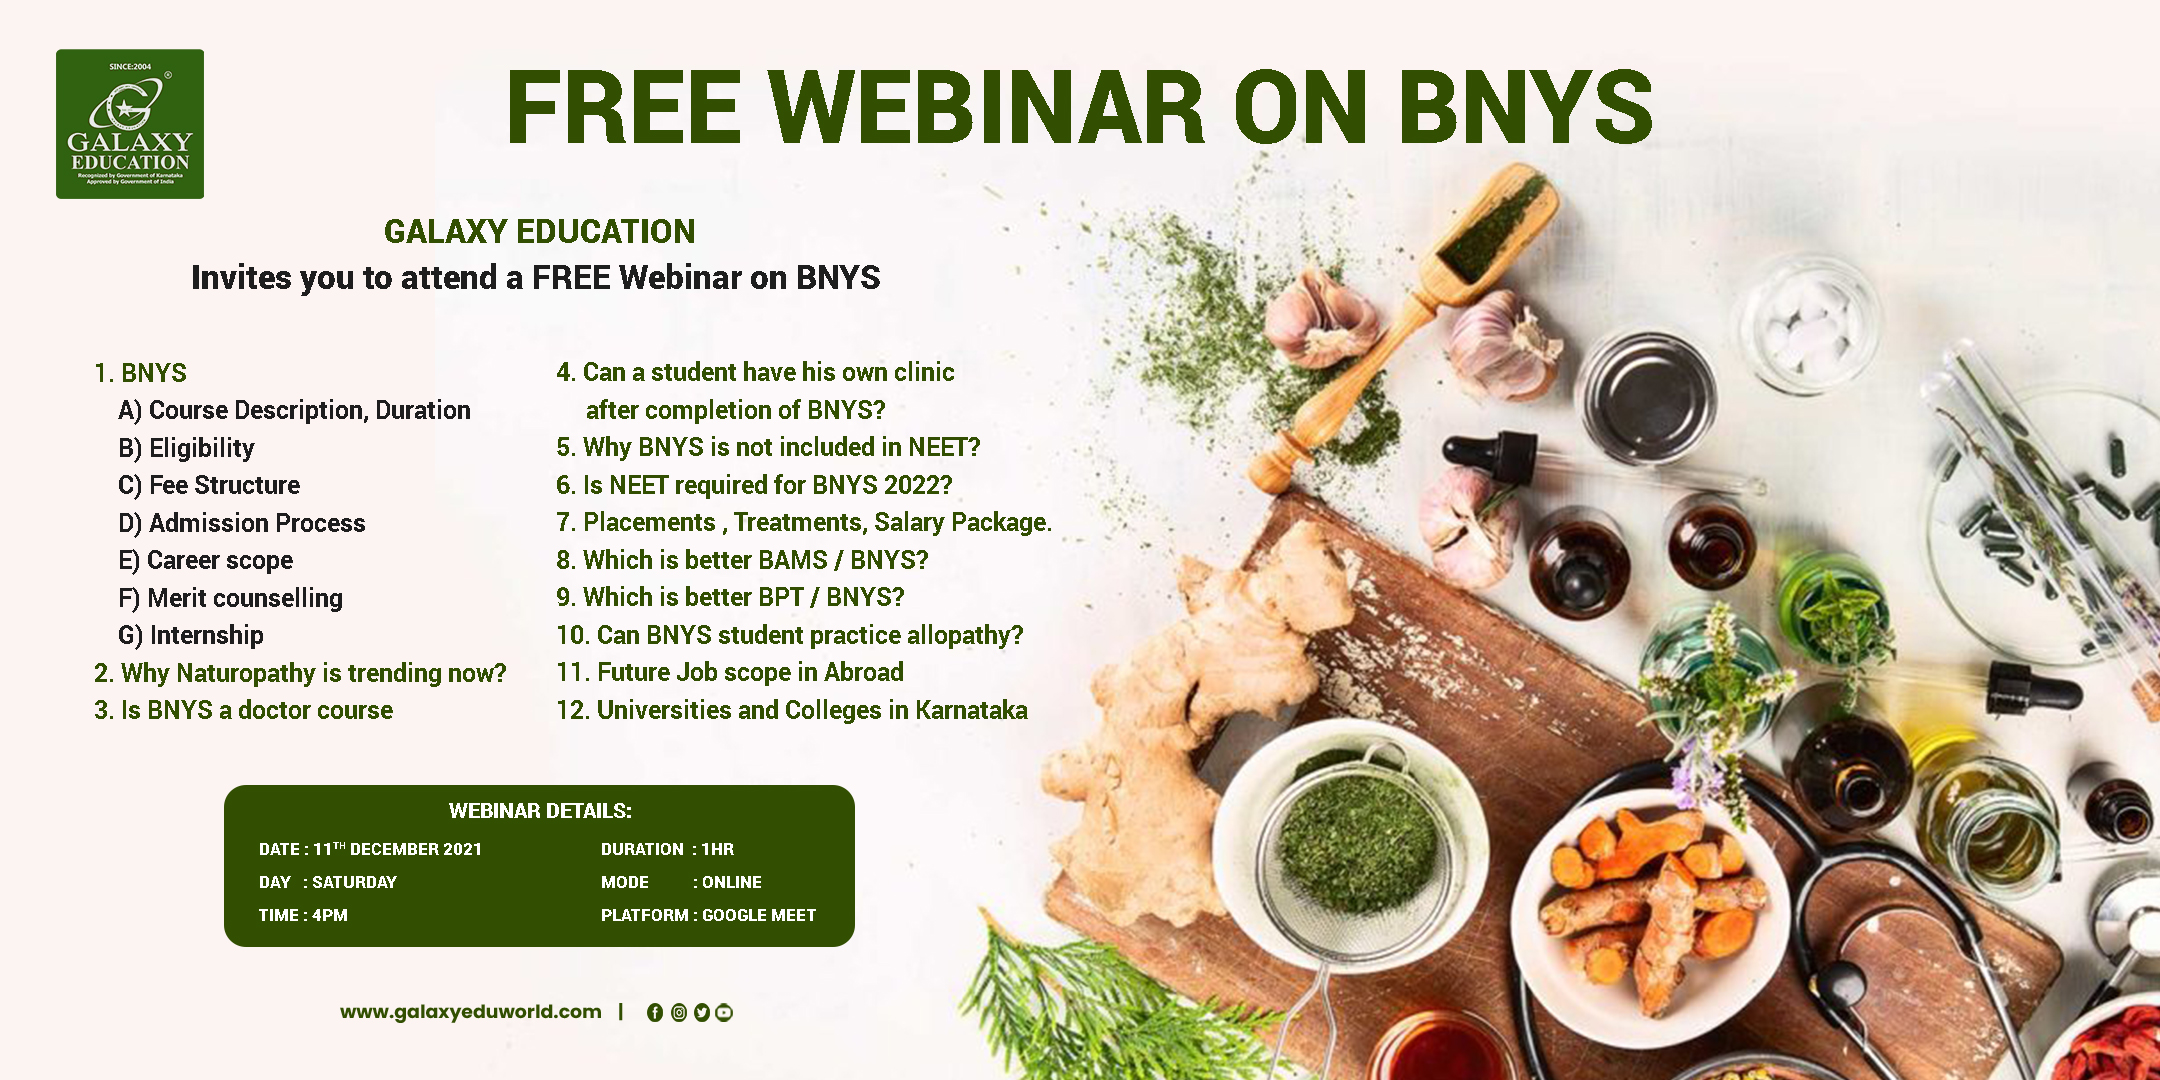 FREE WEBINAR ON BNYS, Online Event